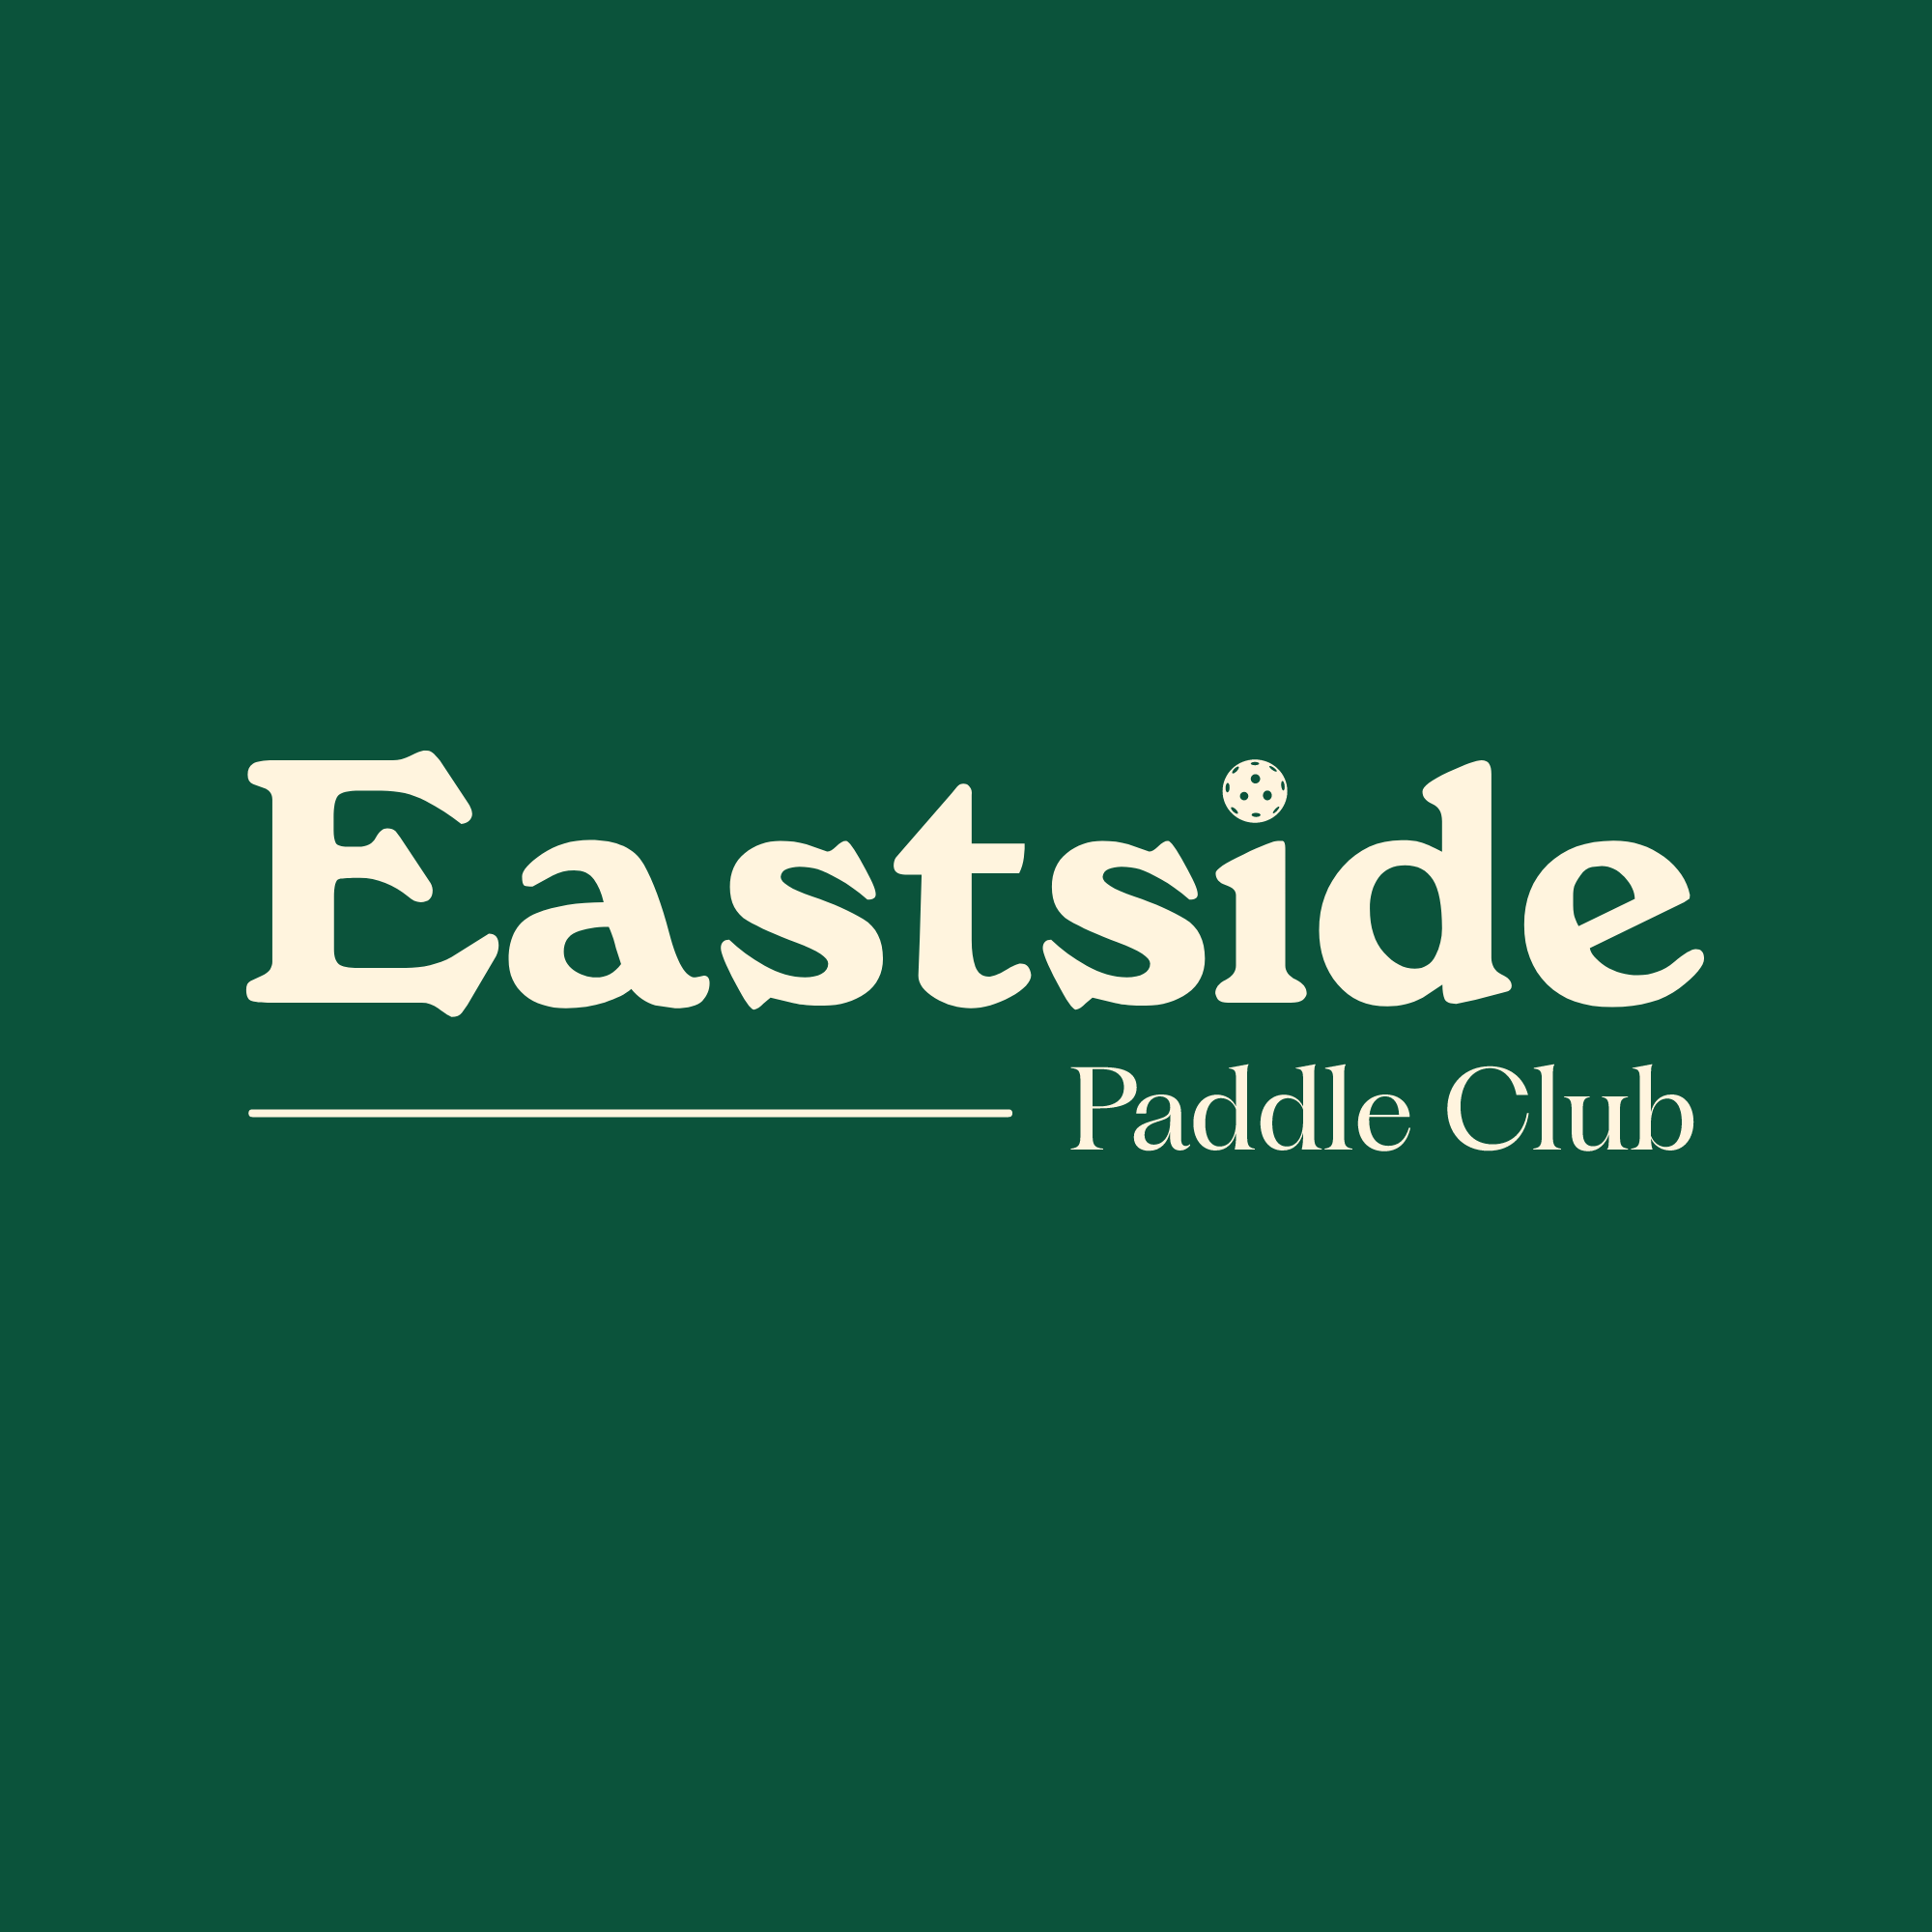 Image 6 of 7 of Eastside Paddle Club court